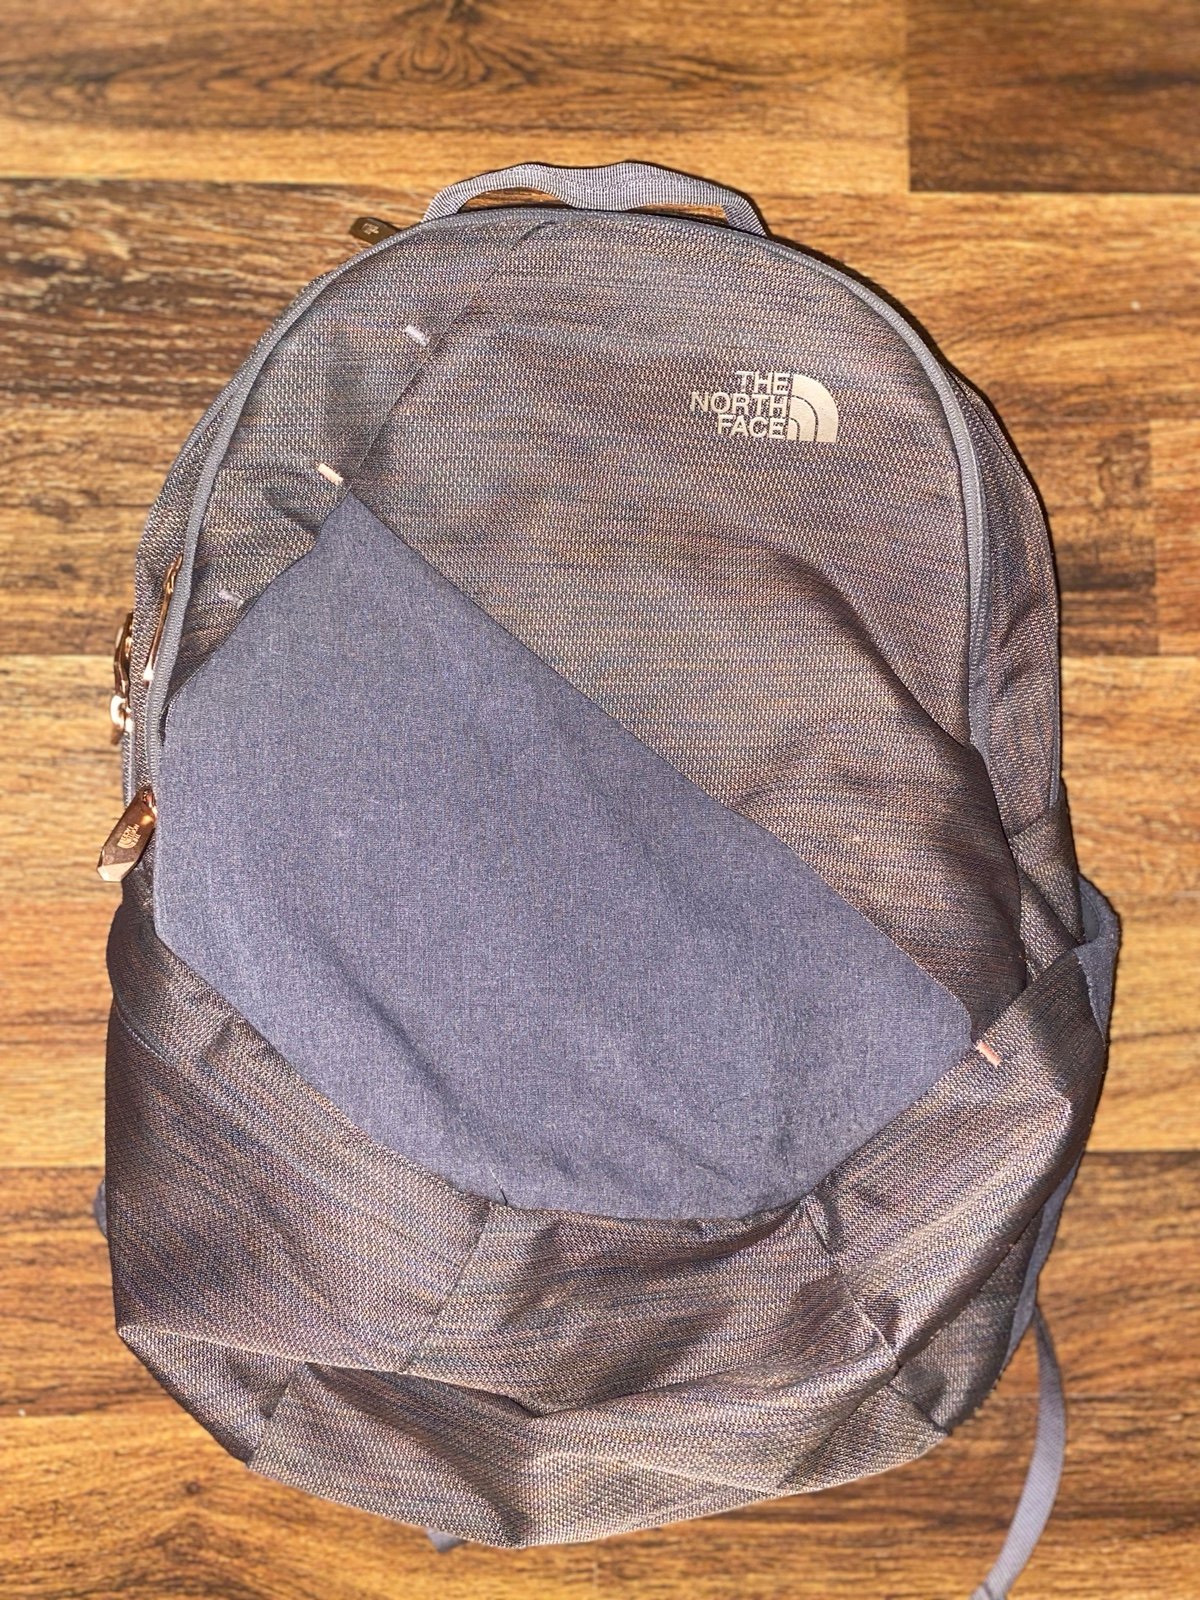 northface backpack fBNmAQd7V